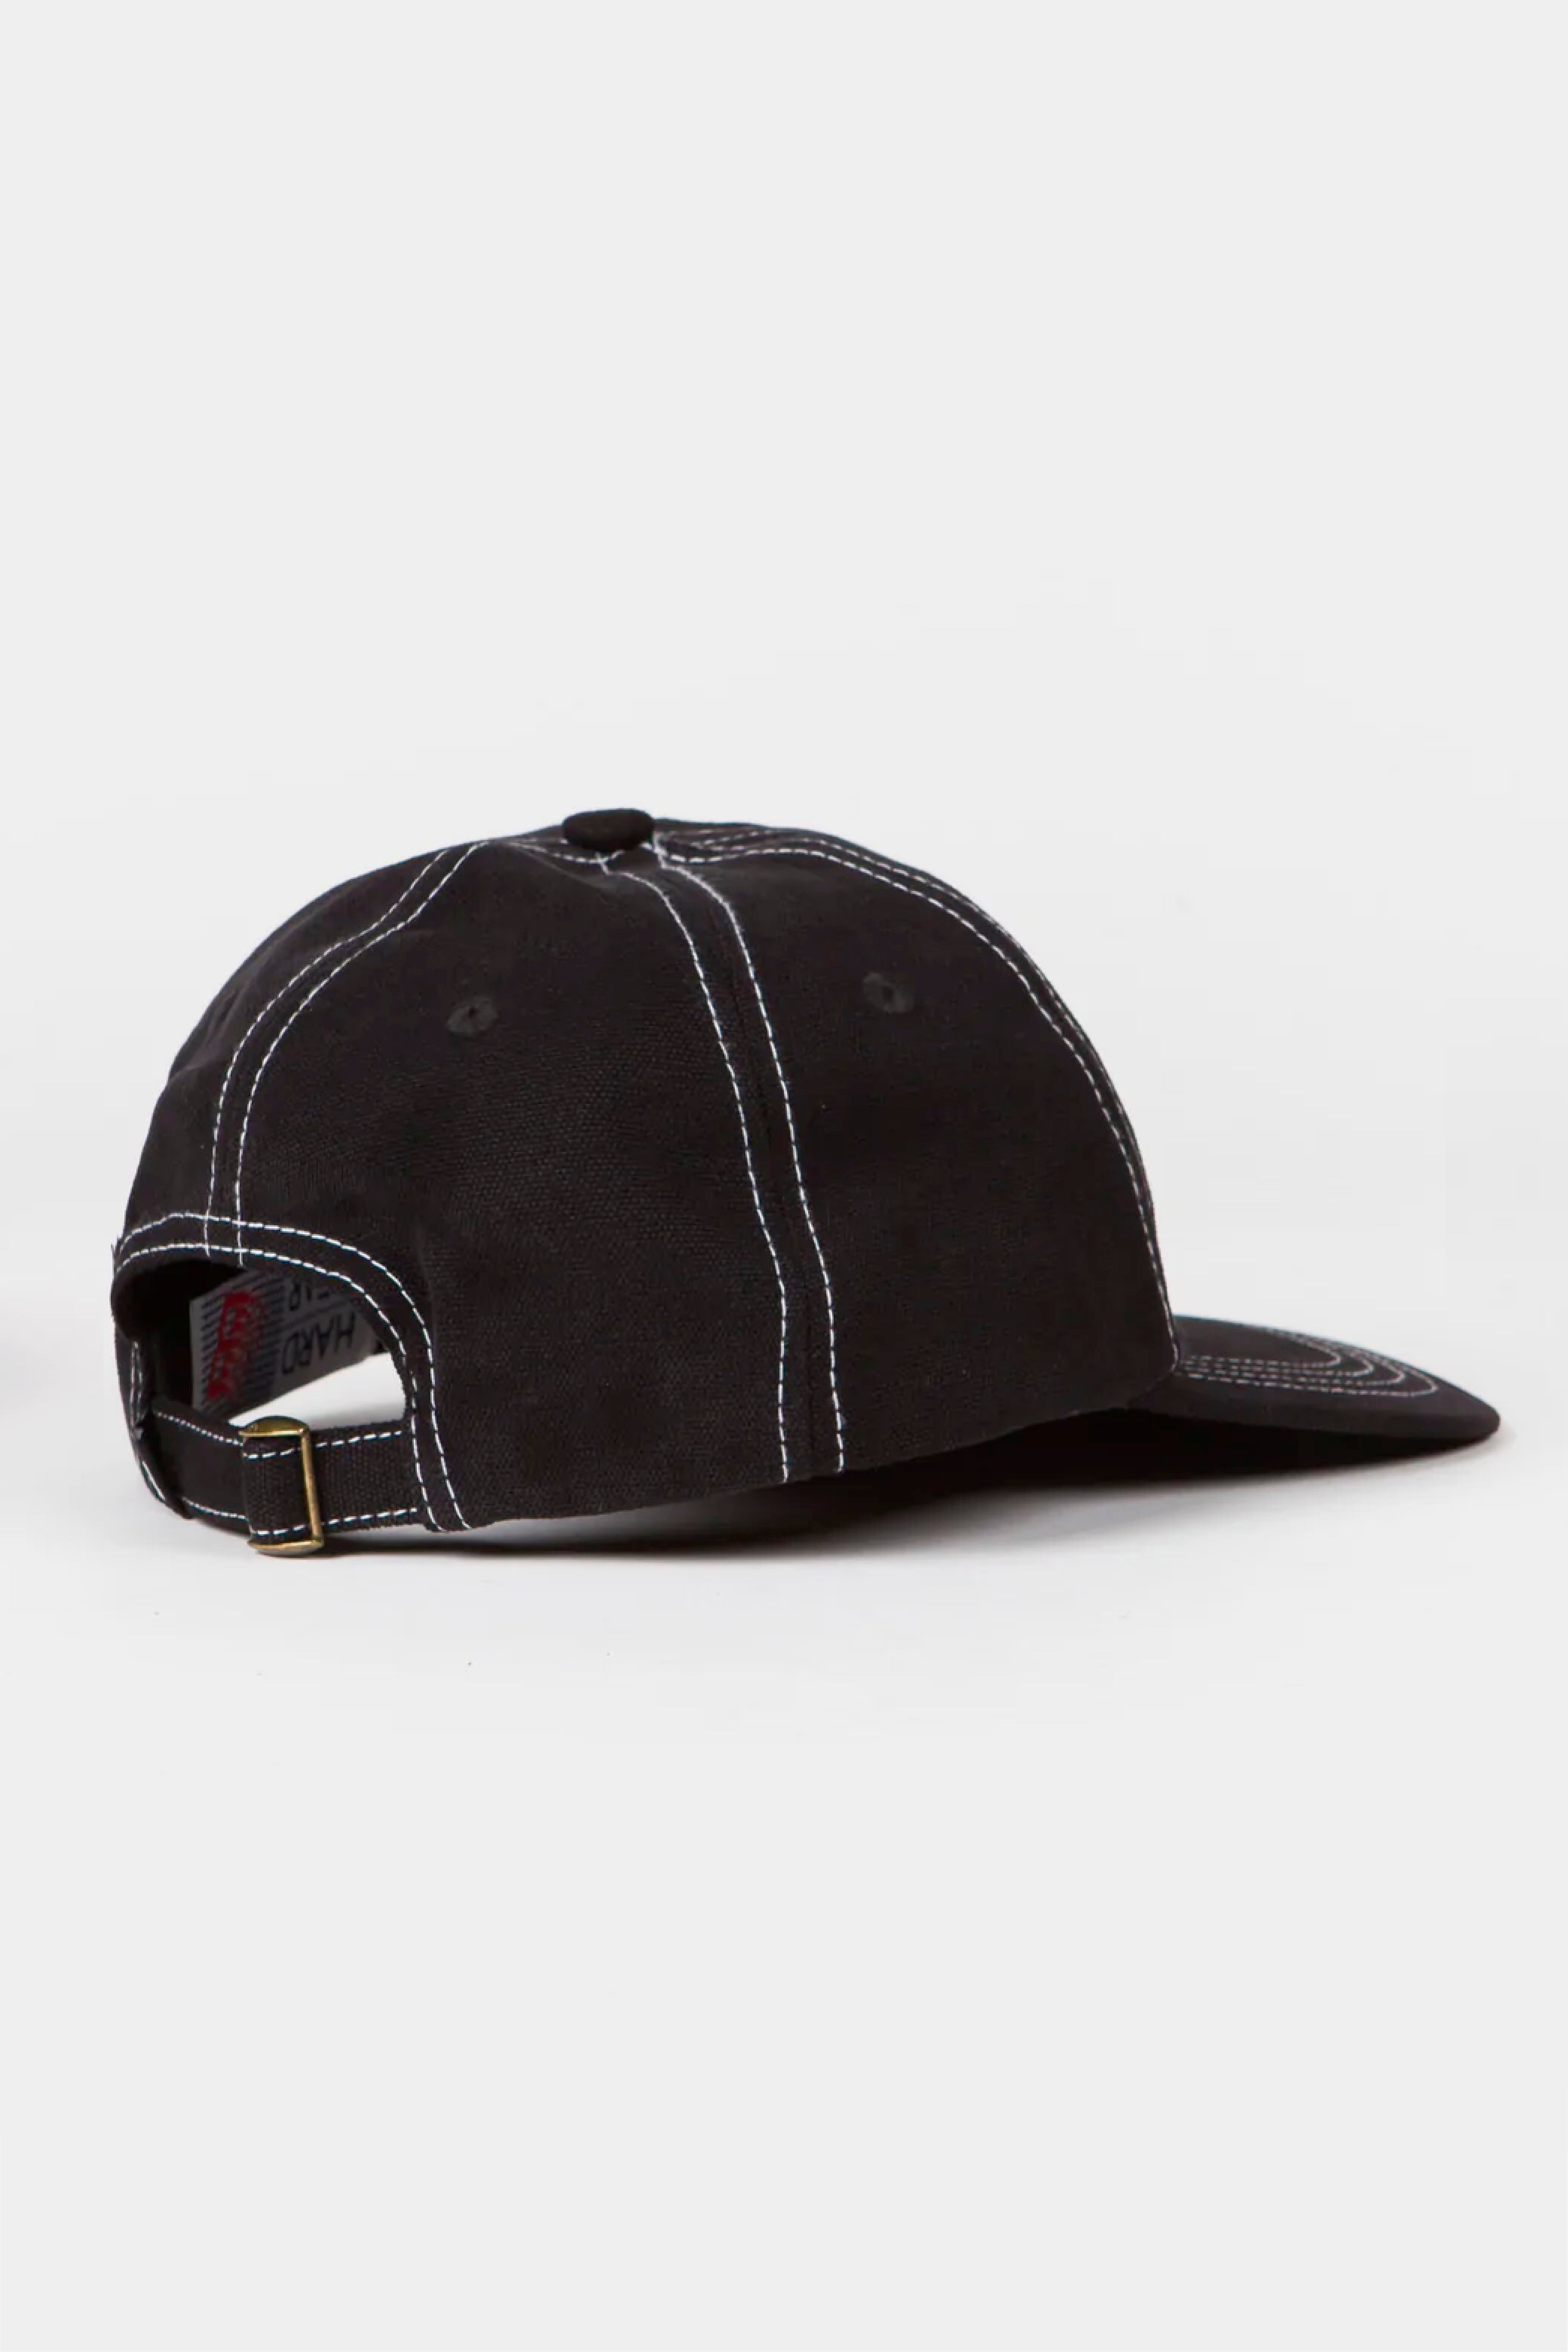 Selectshop FRAME - BRONZE 56K Pitcrew Hat All-Accessories Dubai